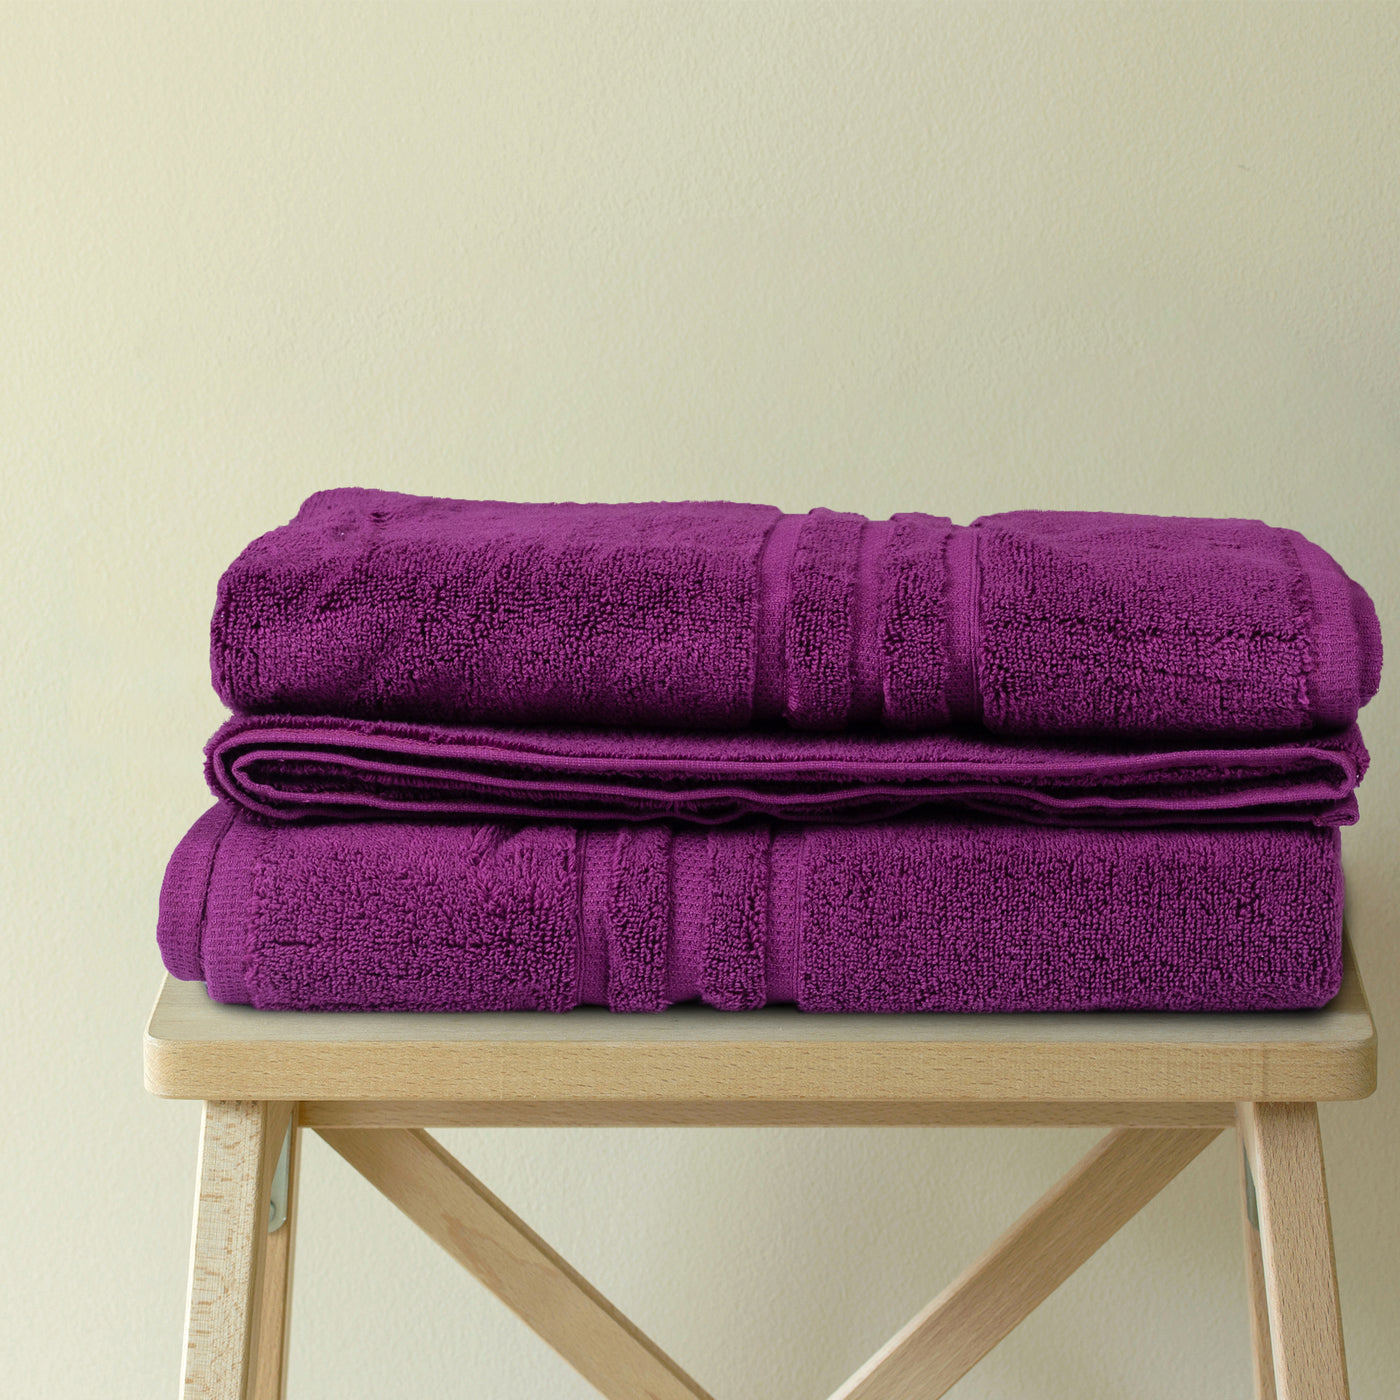 Luxe Fibrosoft Towels (Plum)